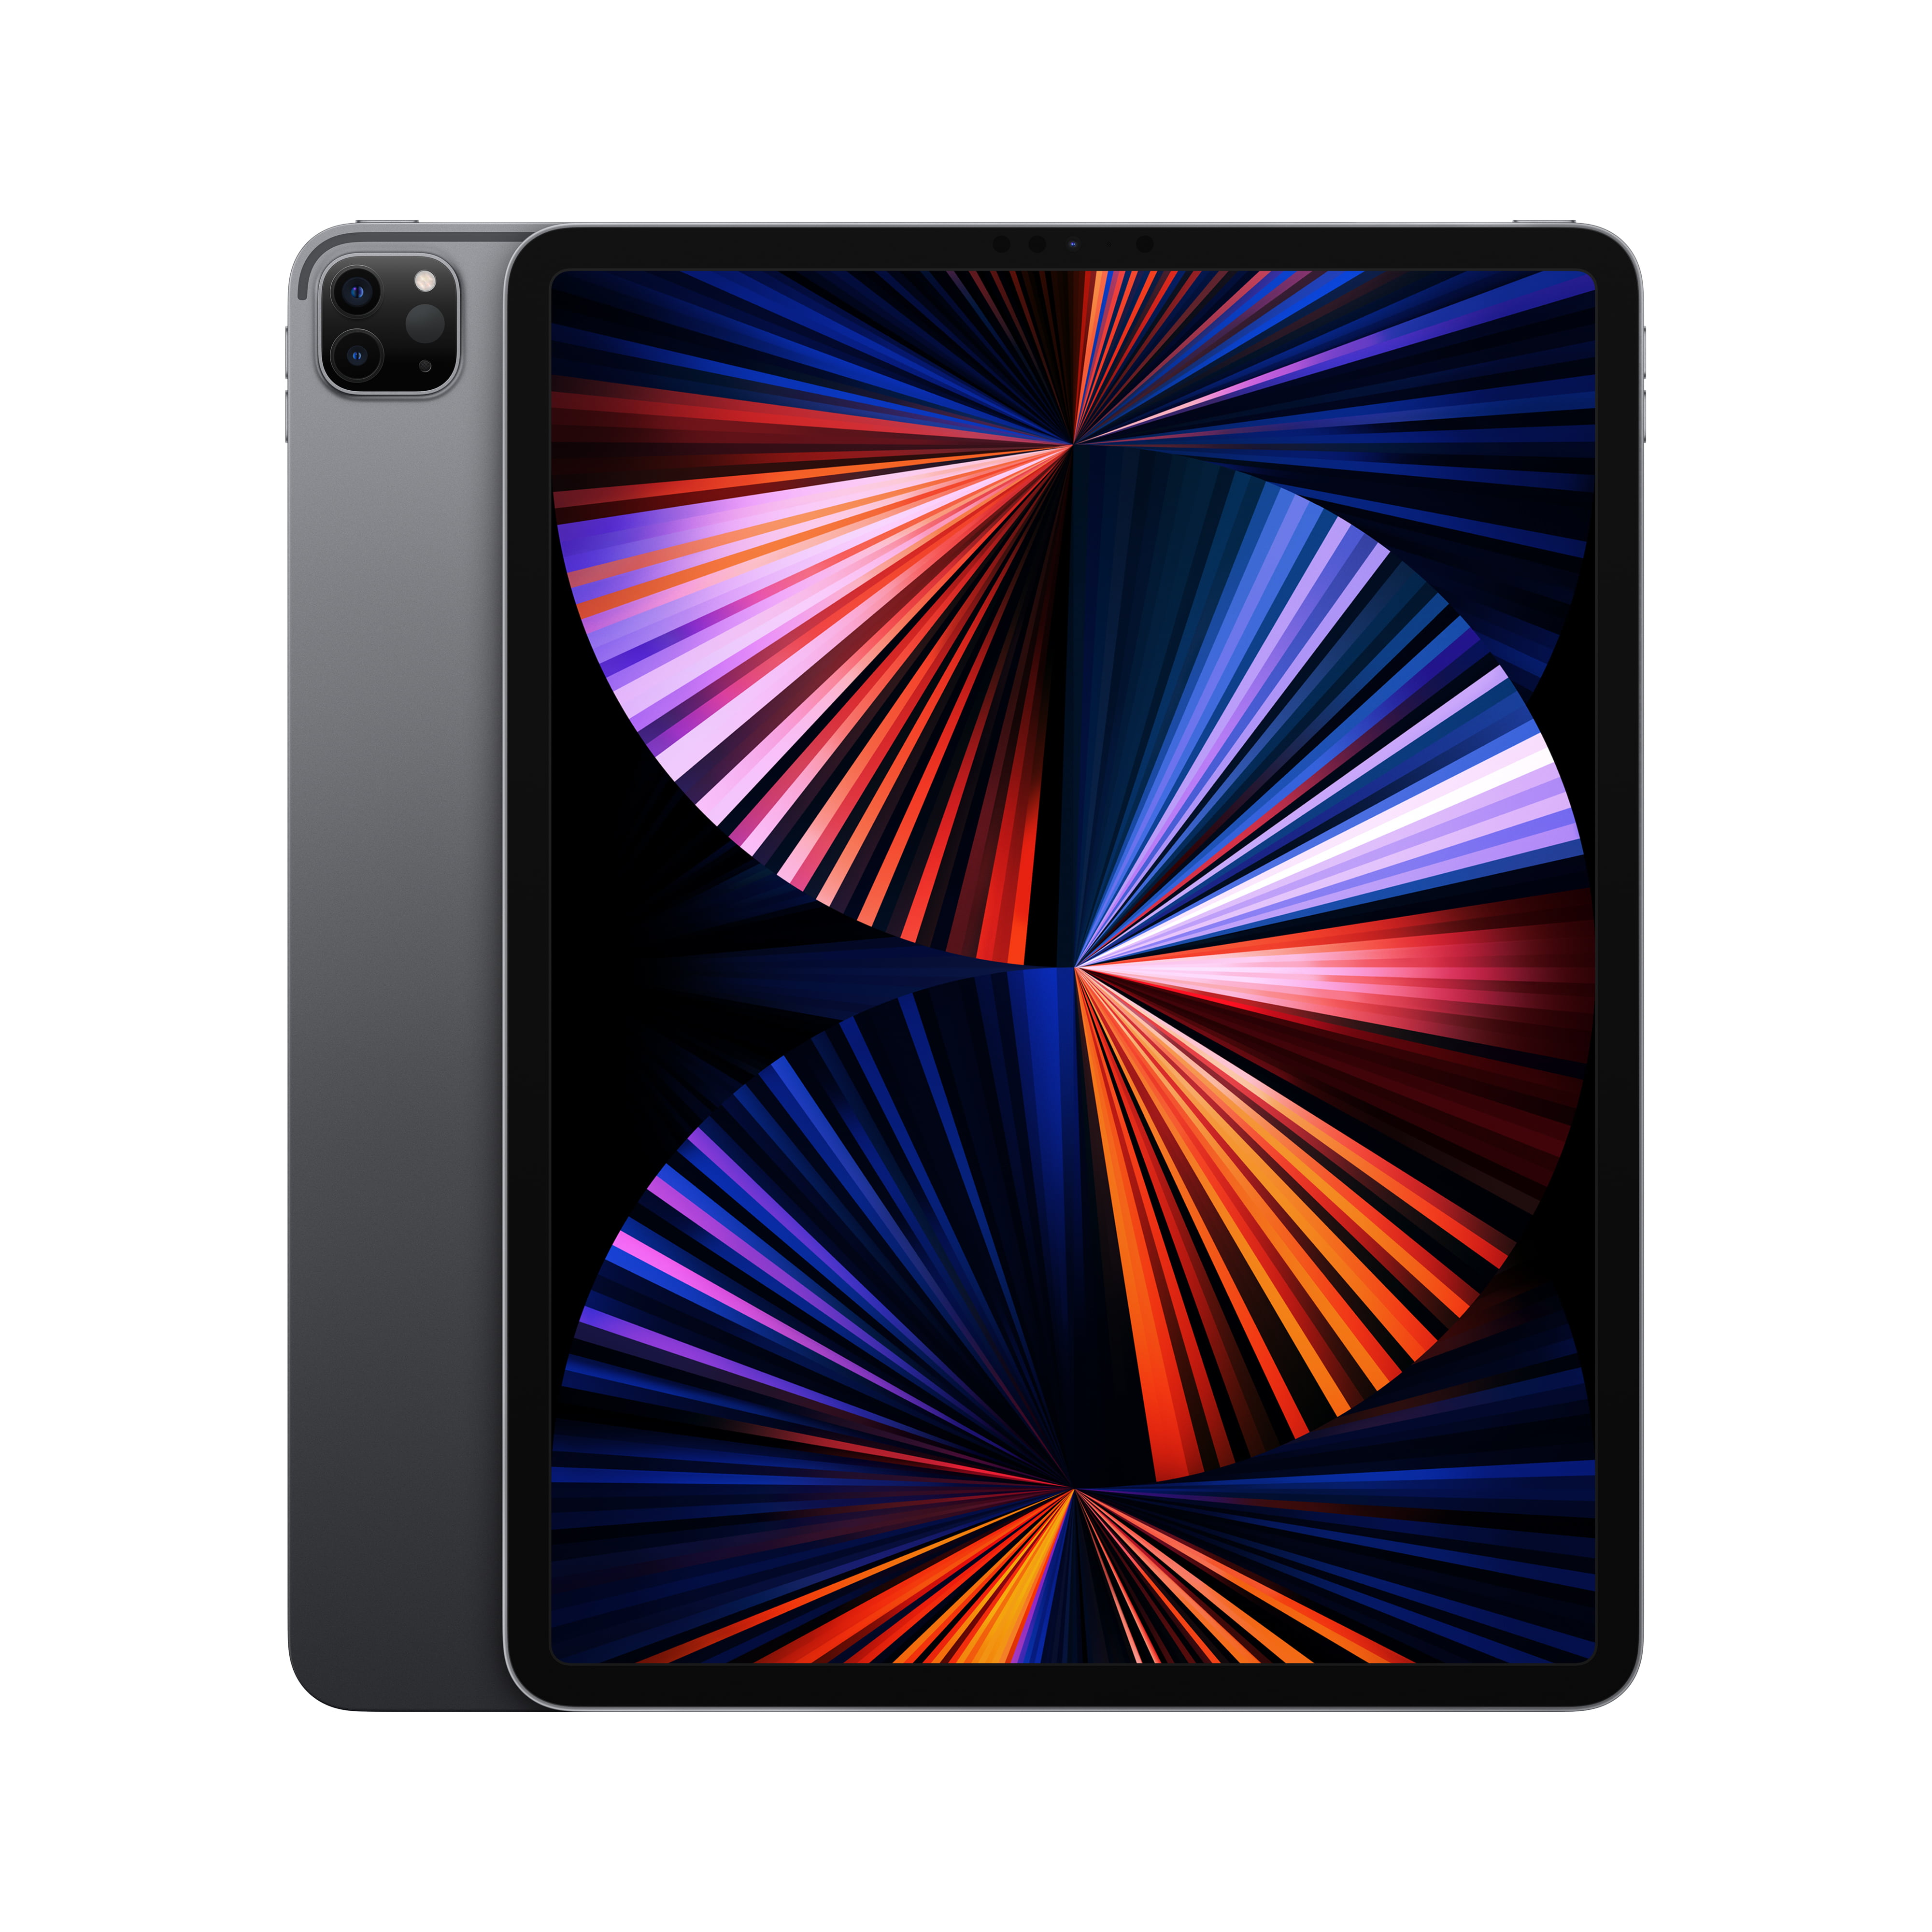 2021 Apple 12.9-inch iPad Pro Wi-Fi 128GB - Space Gray (5th Generation) $849.00 at Walmart